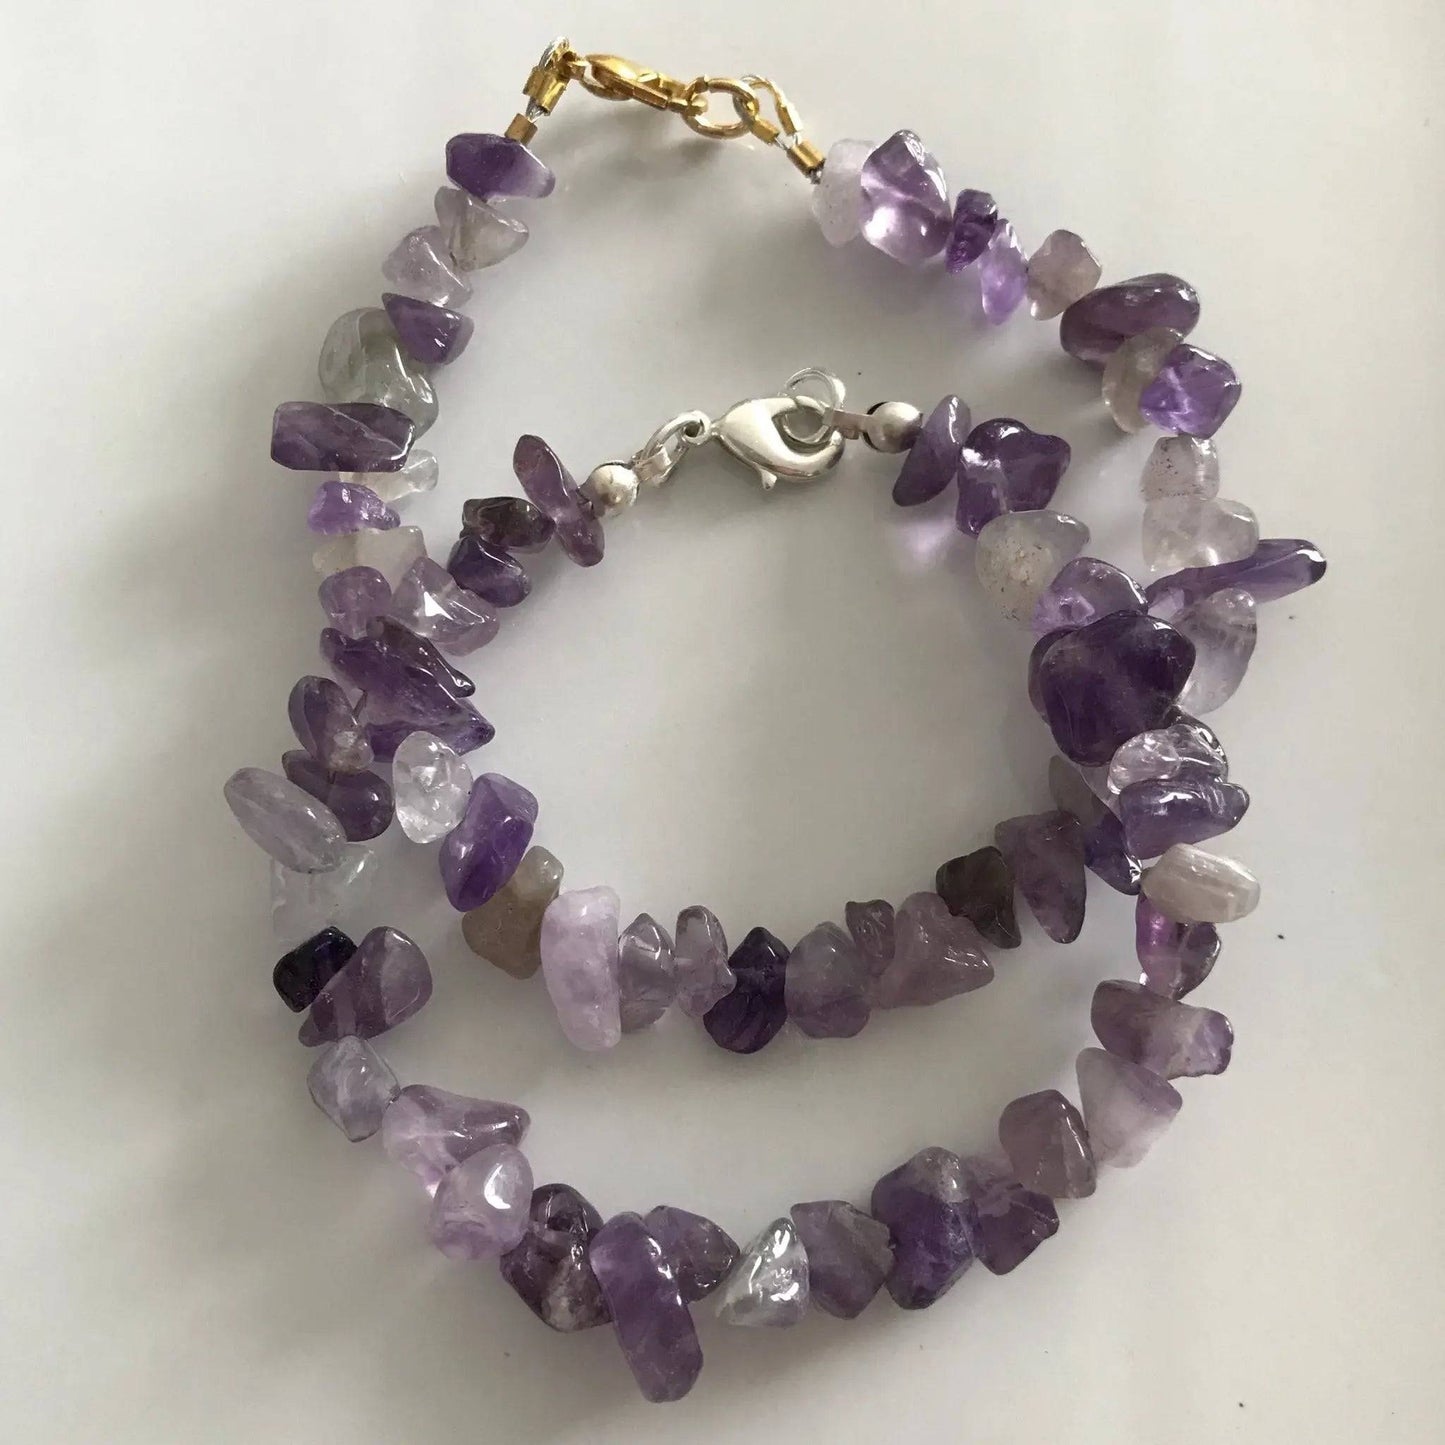 Amethyst Bracelet - Uplift Beads